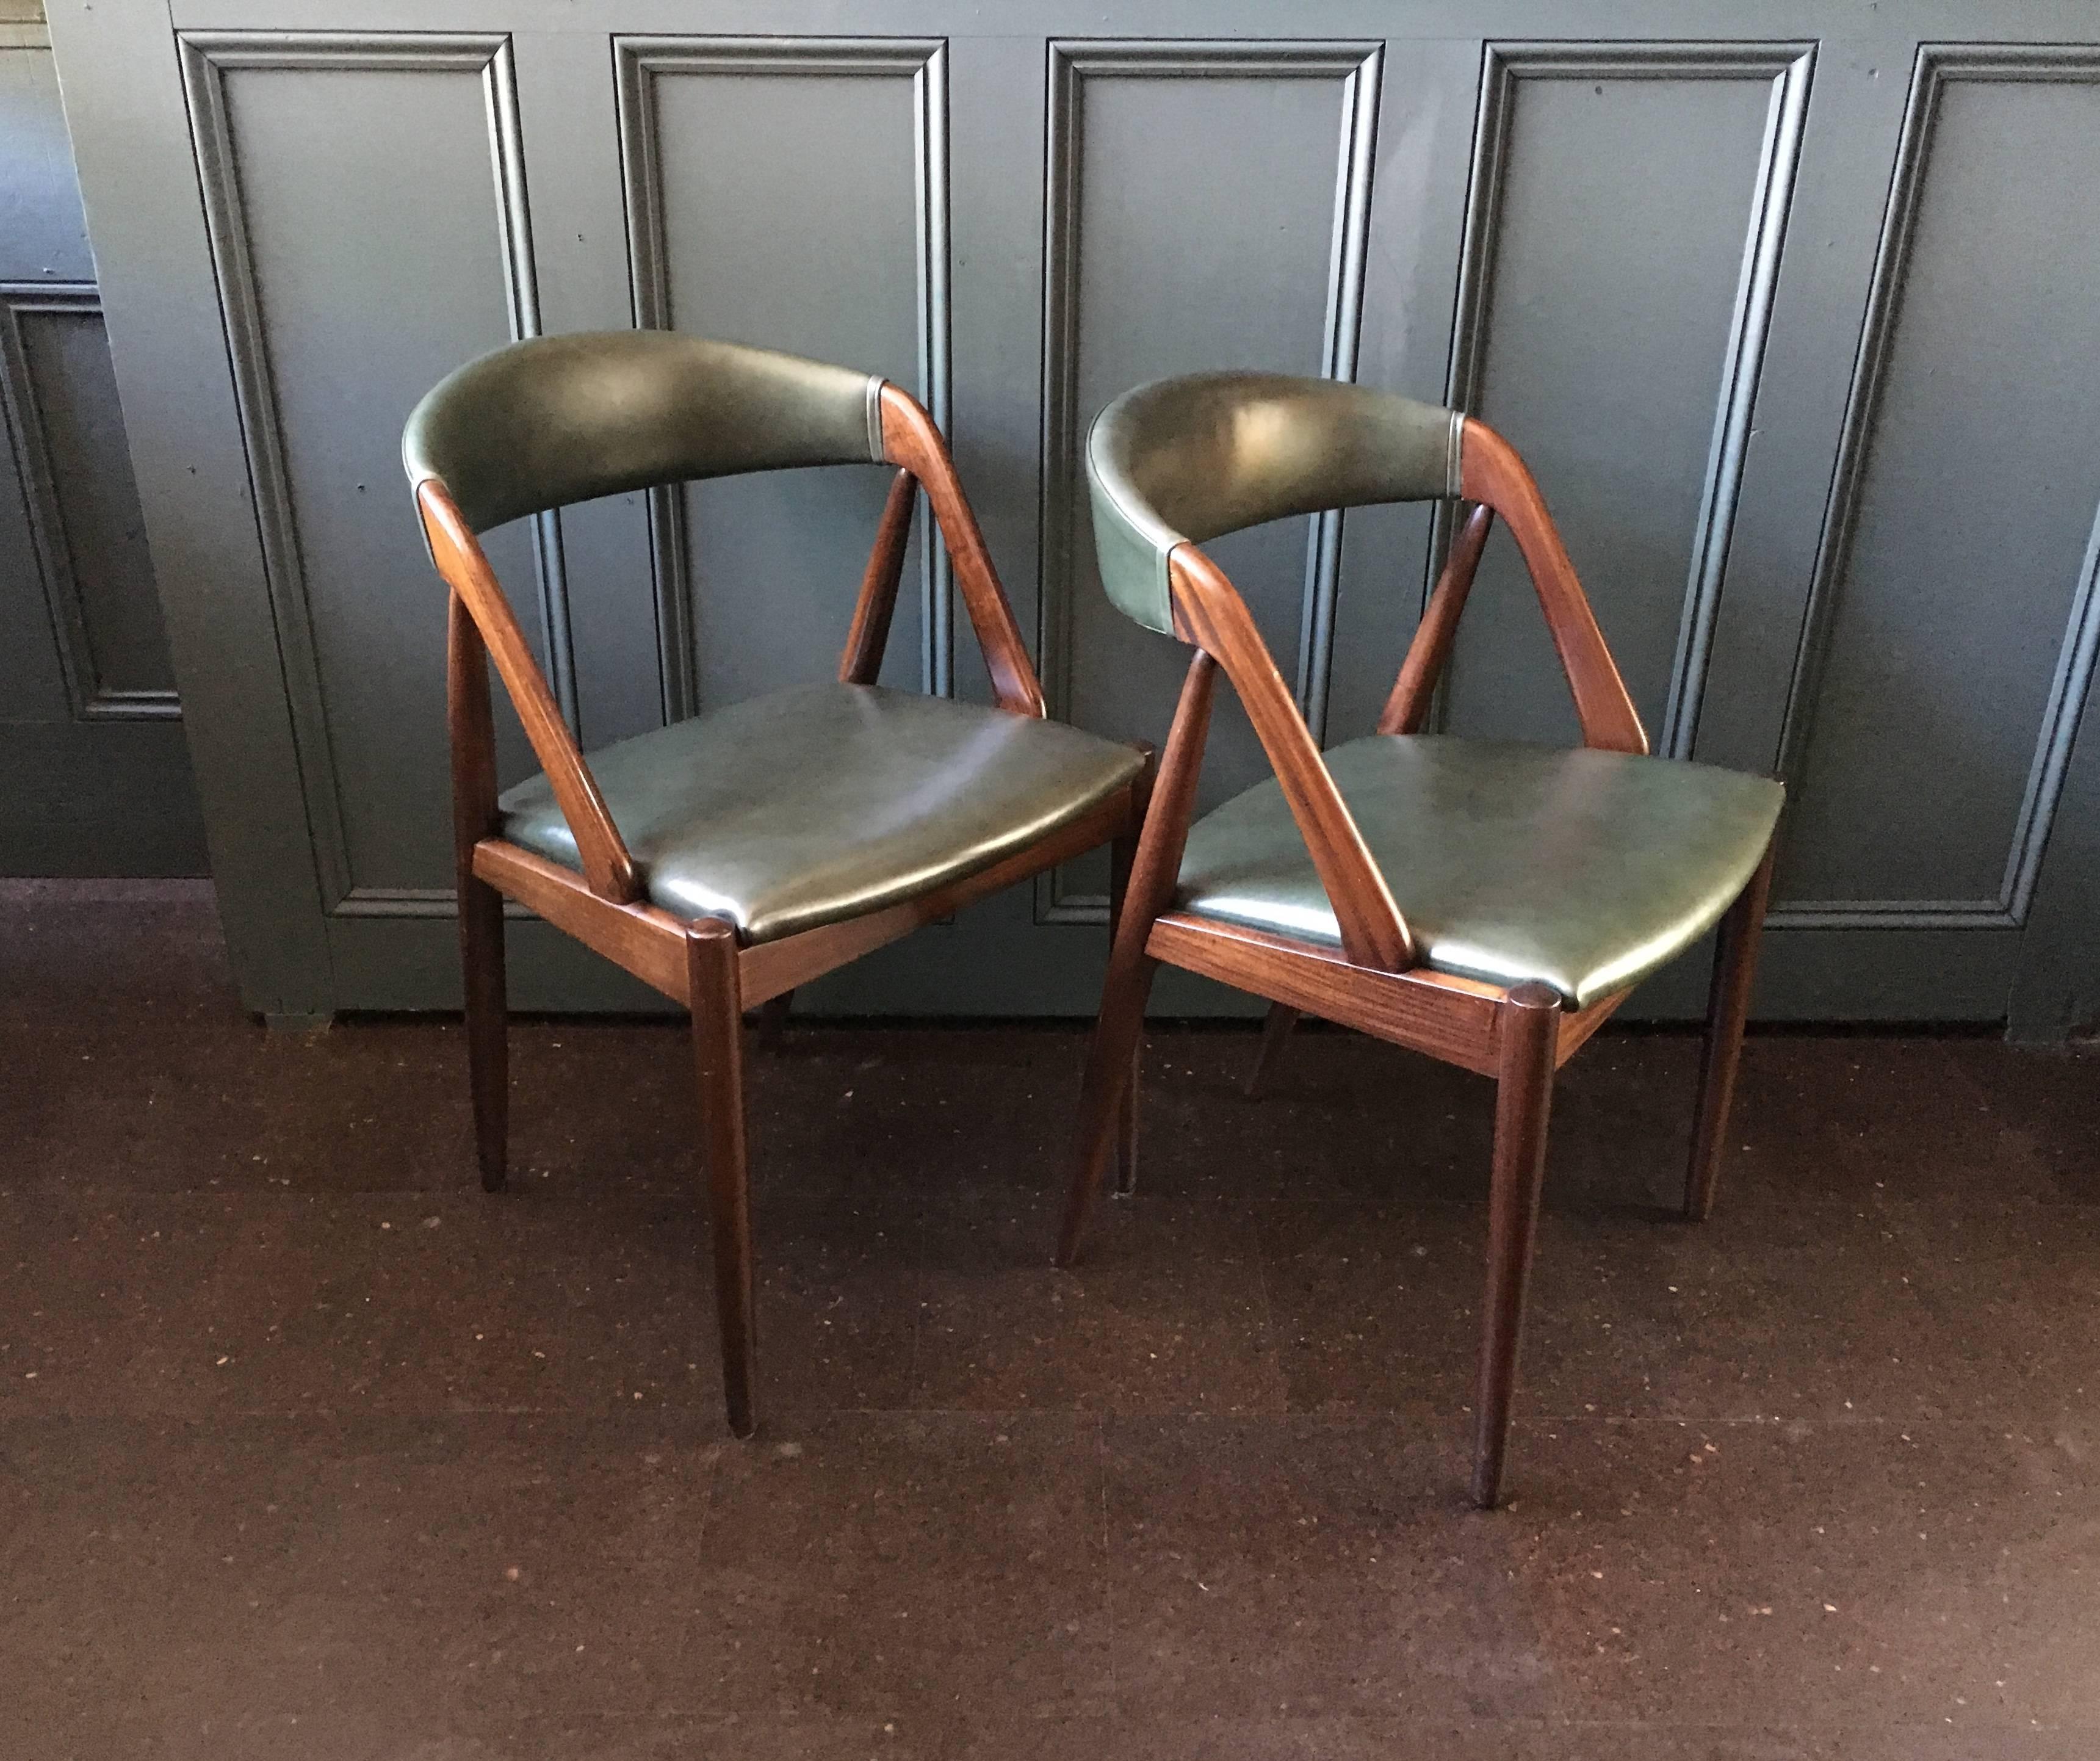 20th Century Kai Kristiansen Dining Chairs, model 31, restored set of 4.